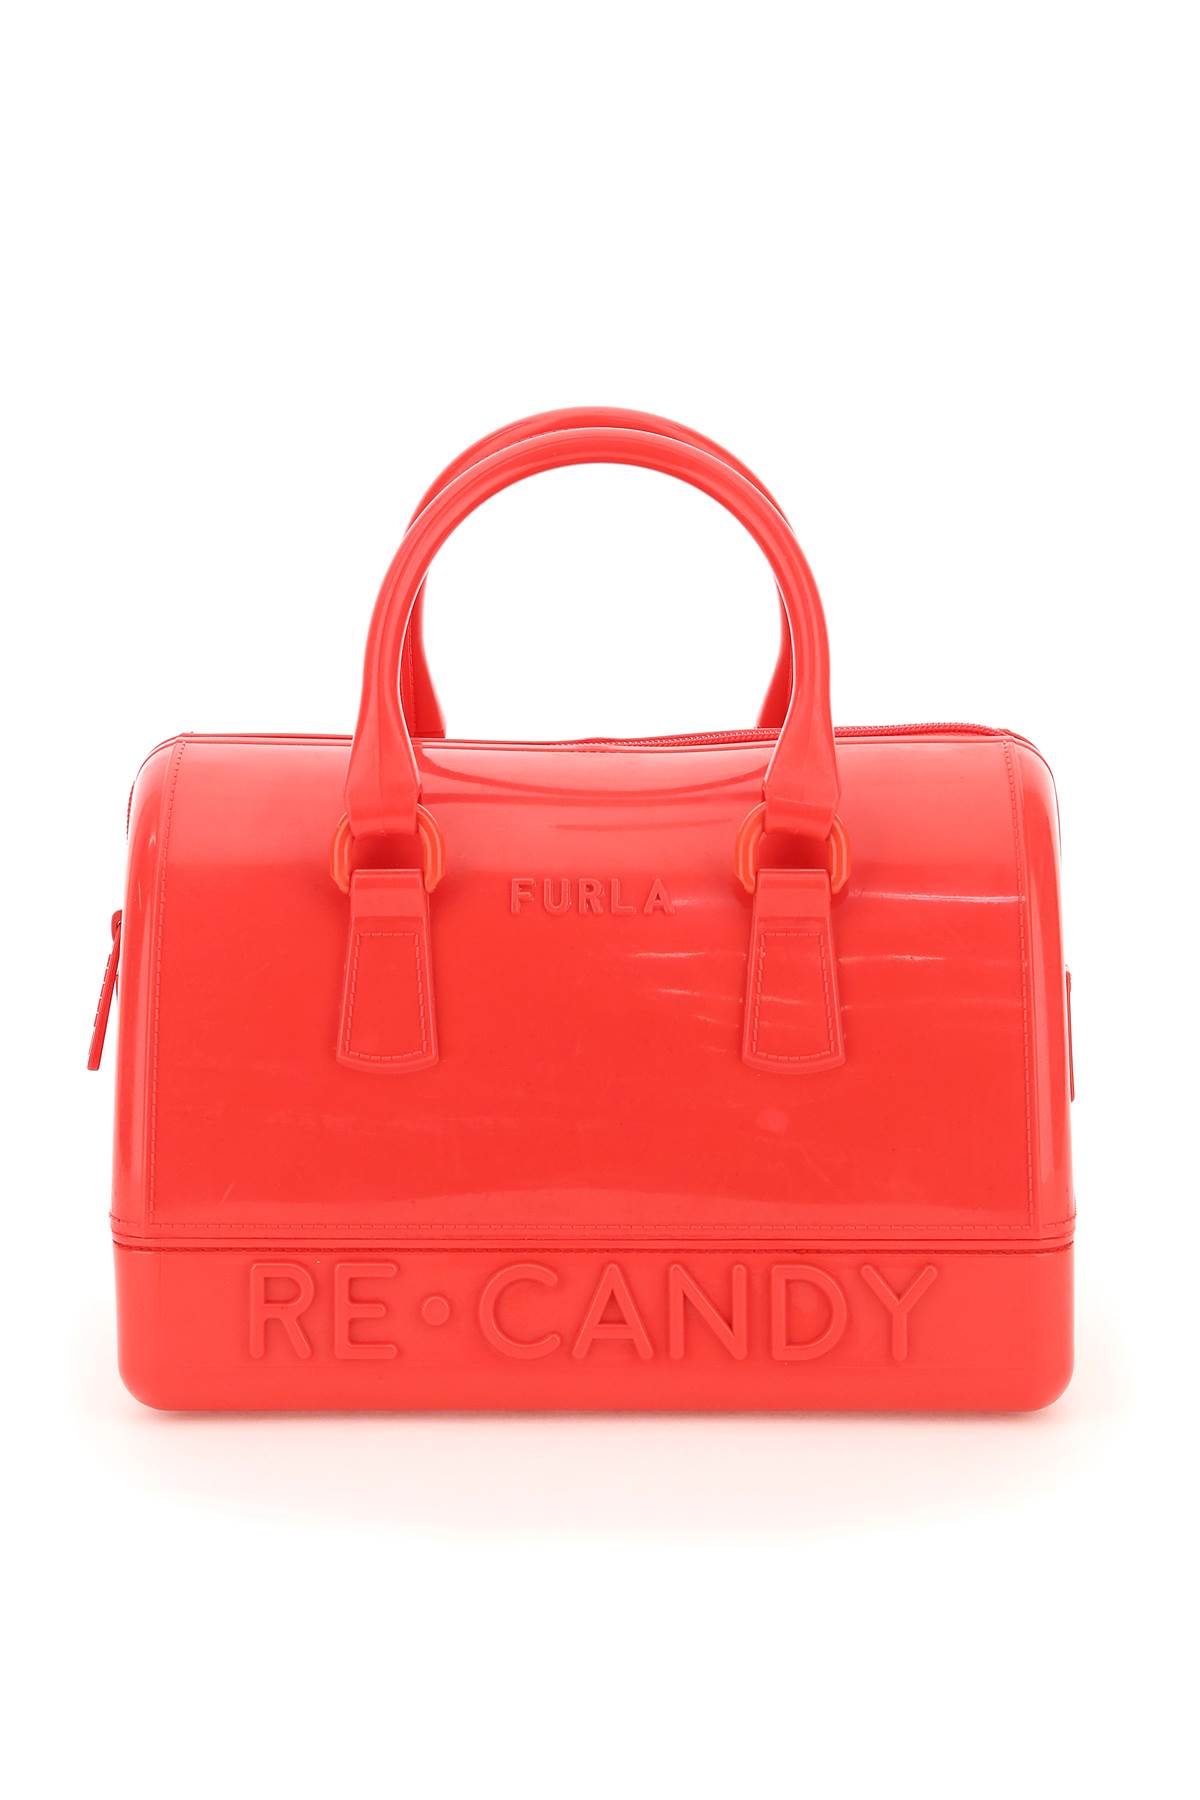 Furla Recycled Tpu Candy Boston S Bag